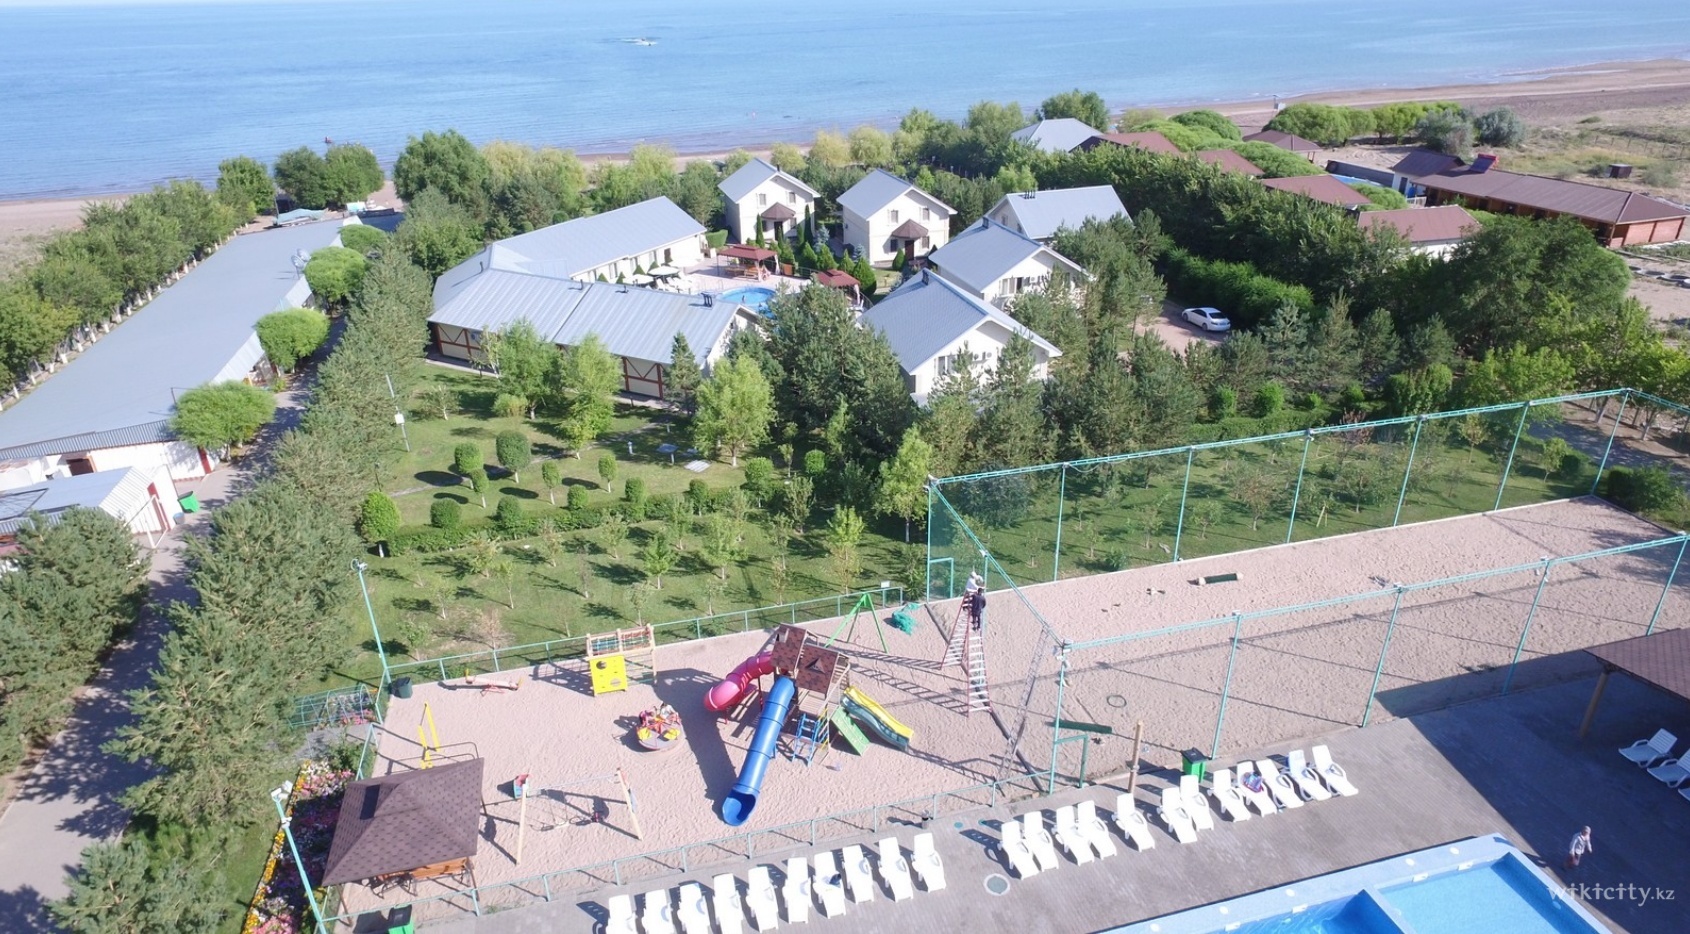 Фото Центр Семейного Отдыха - Kapchik.kz - Kunaev. Вид сверху на территорию комплекса